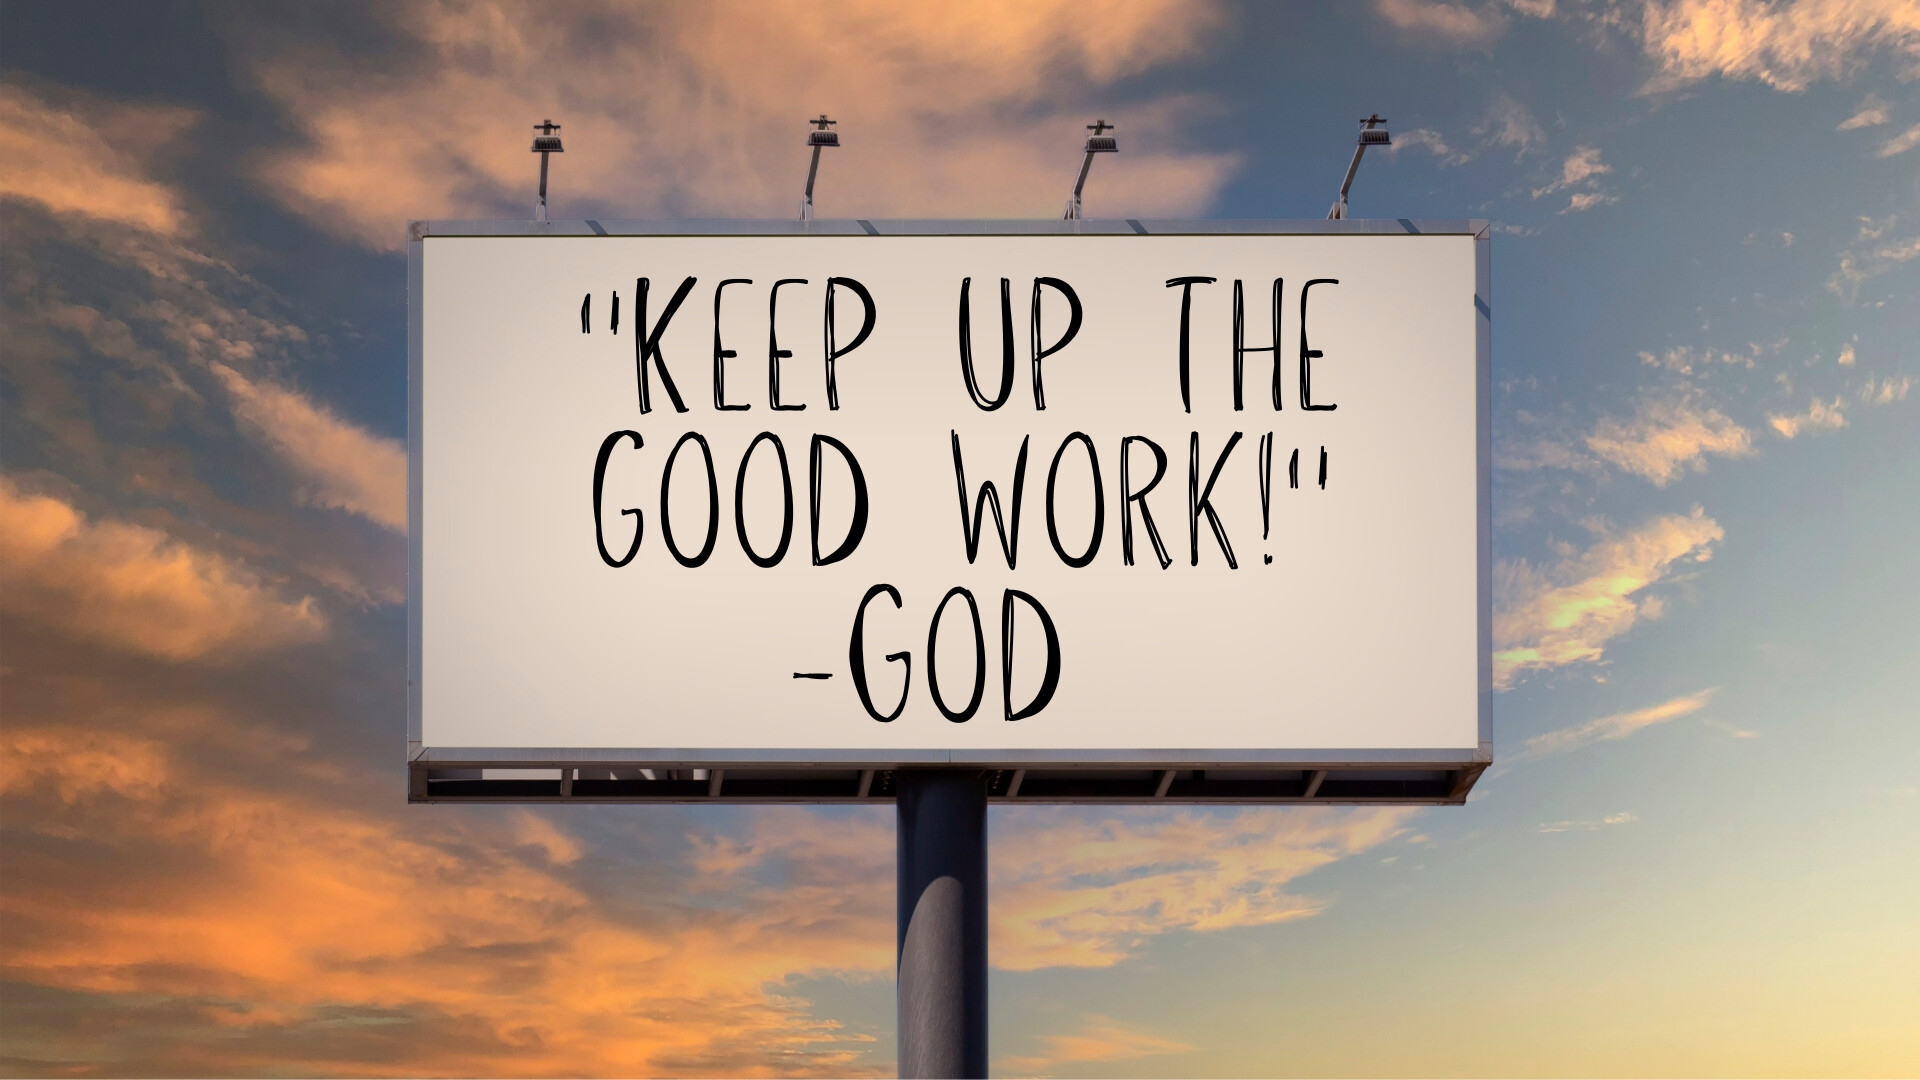 "Keep Up The Good Work!" -God, Children's Message